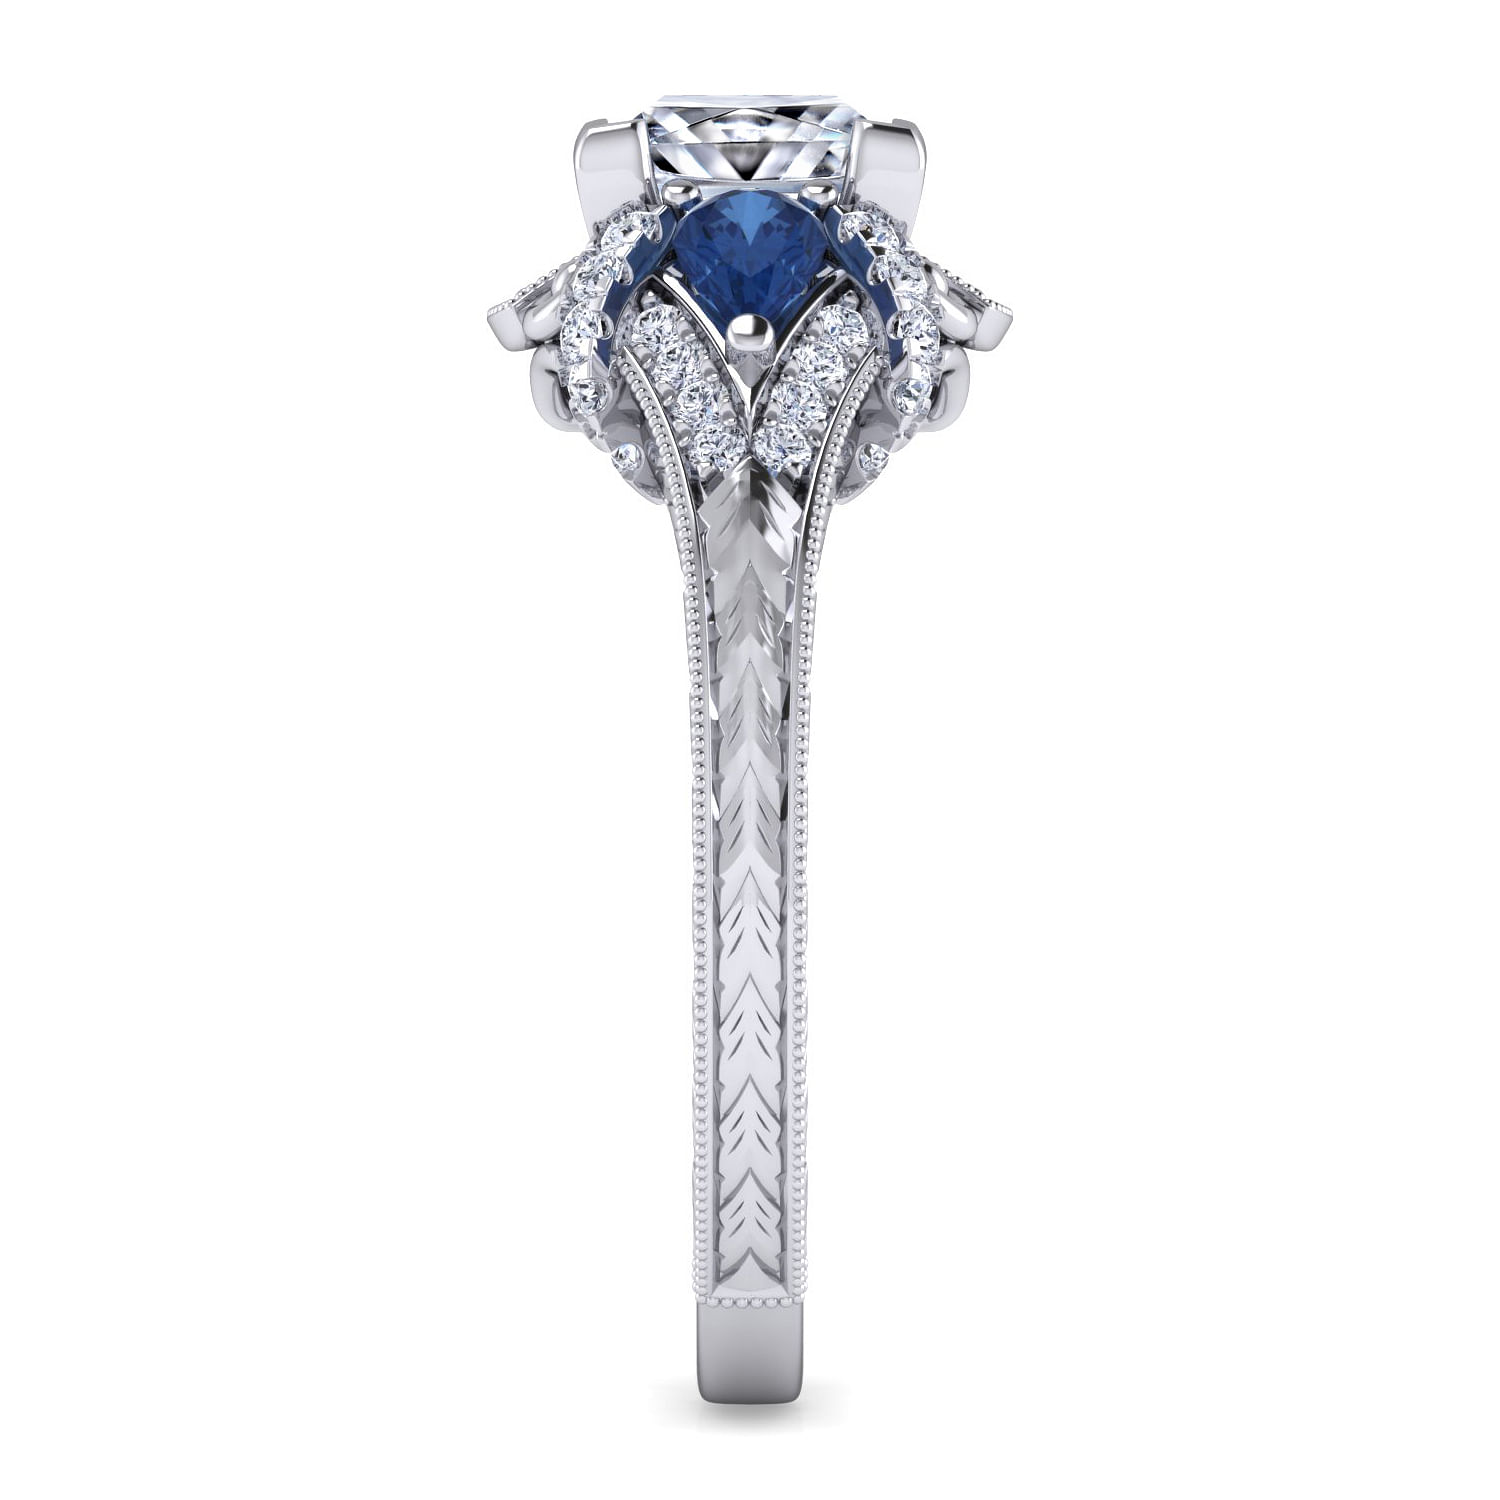 14K White Gold Princess Cut Sapphire and Diamond Engagement Ring